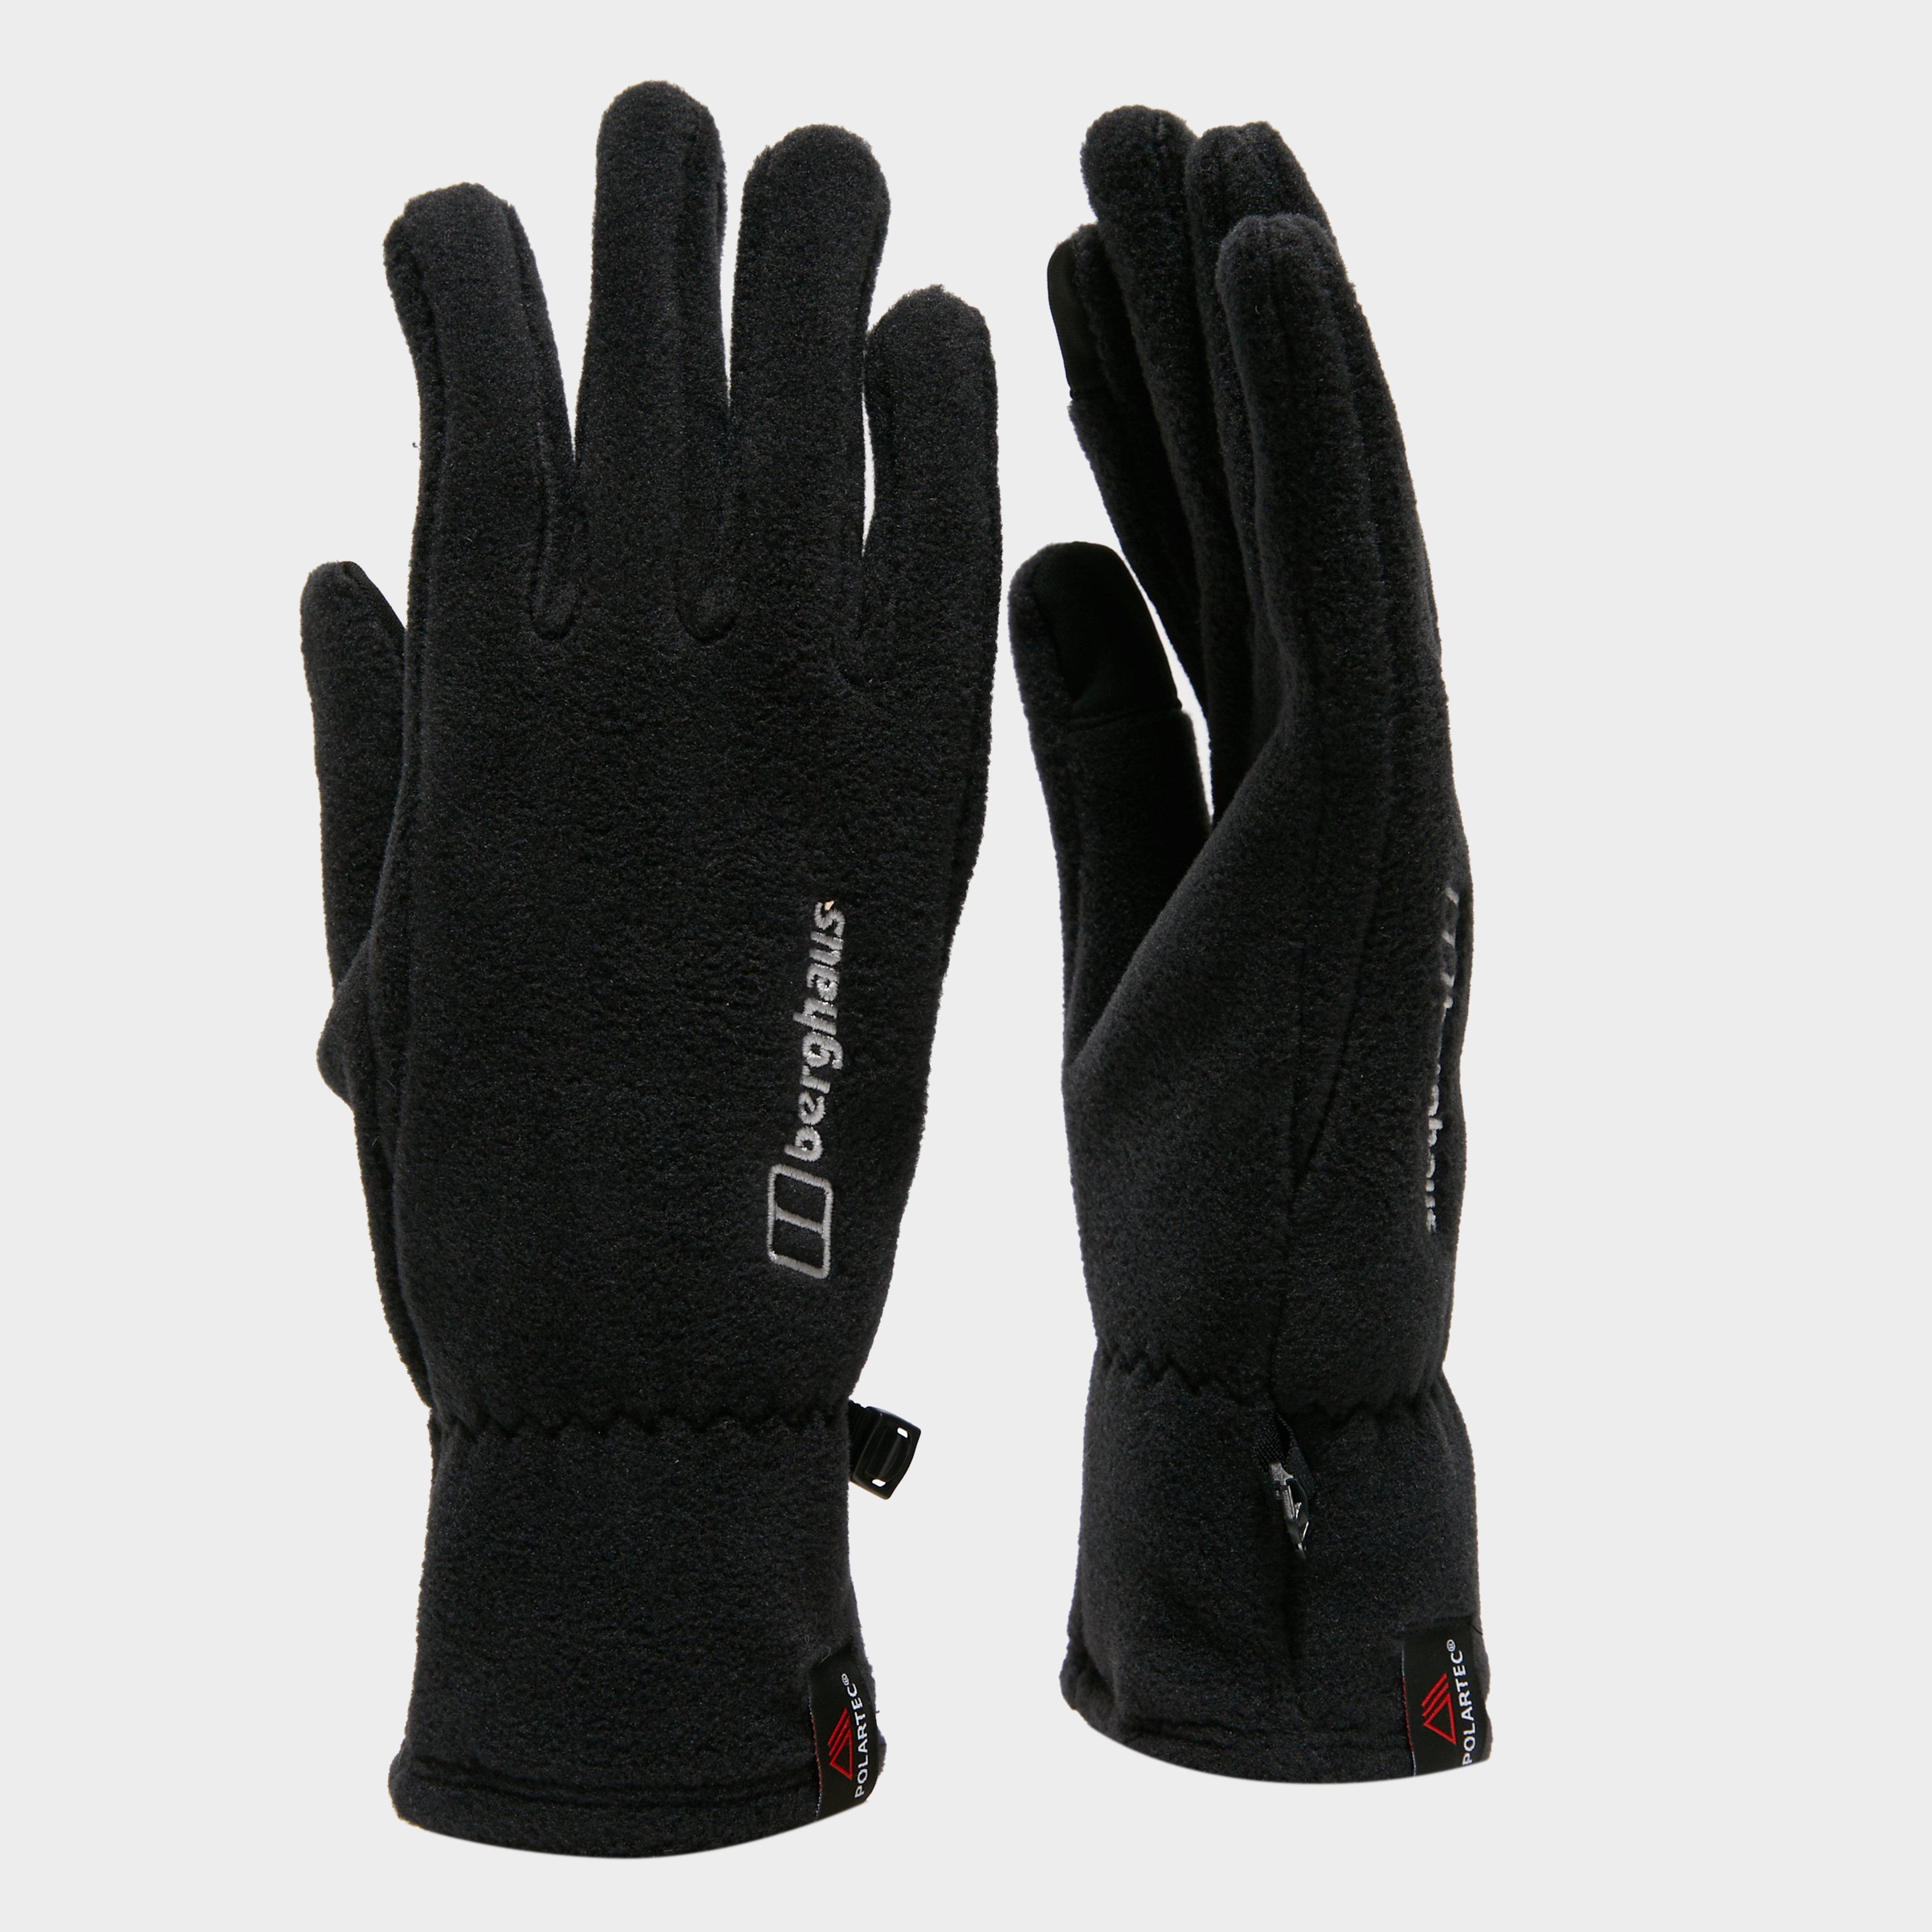 Berghaus Men's Prism Polartec Gloves, Black